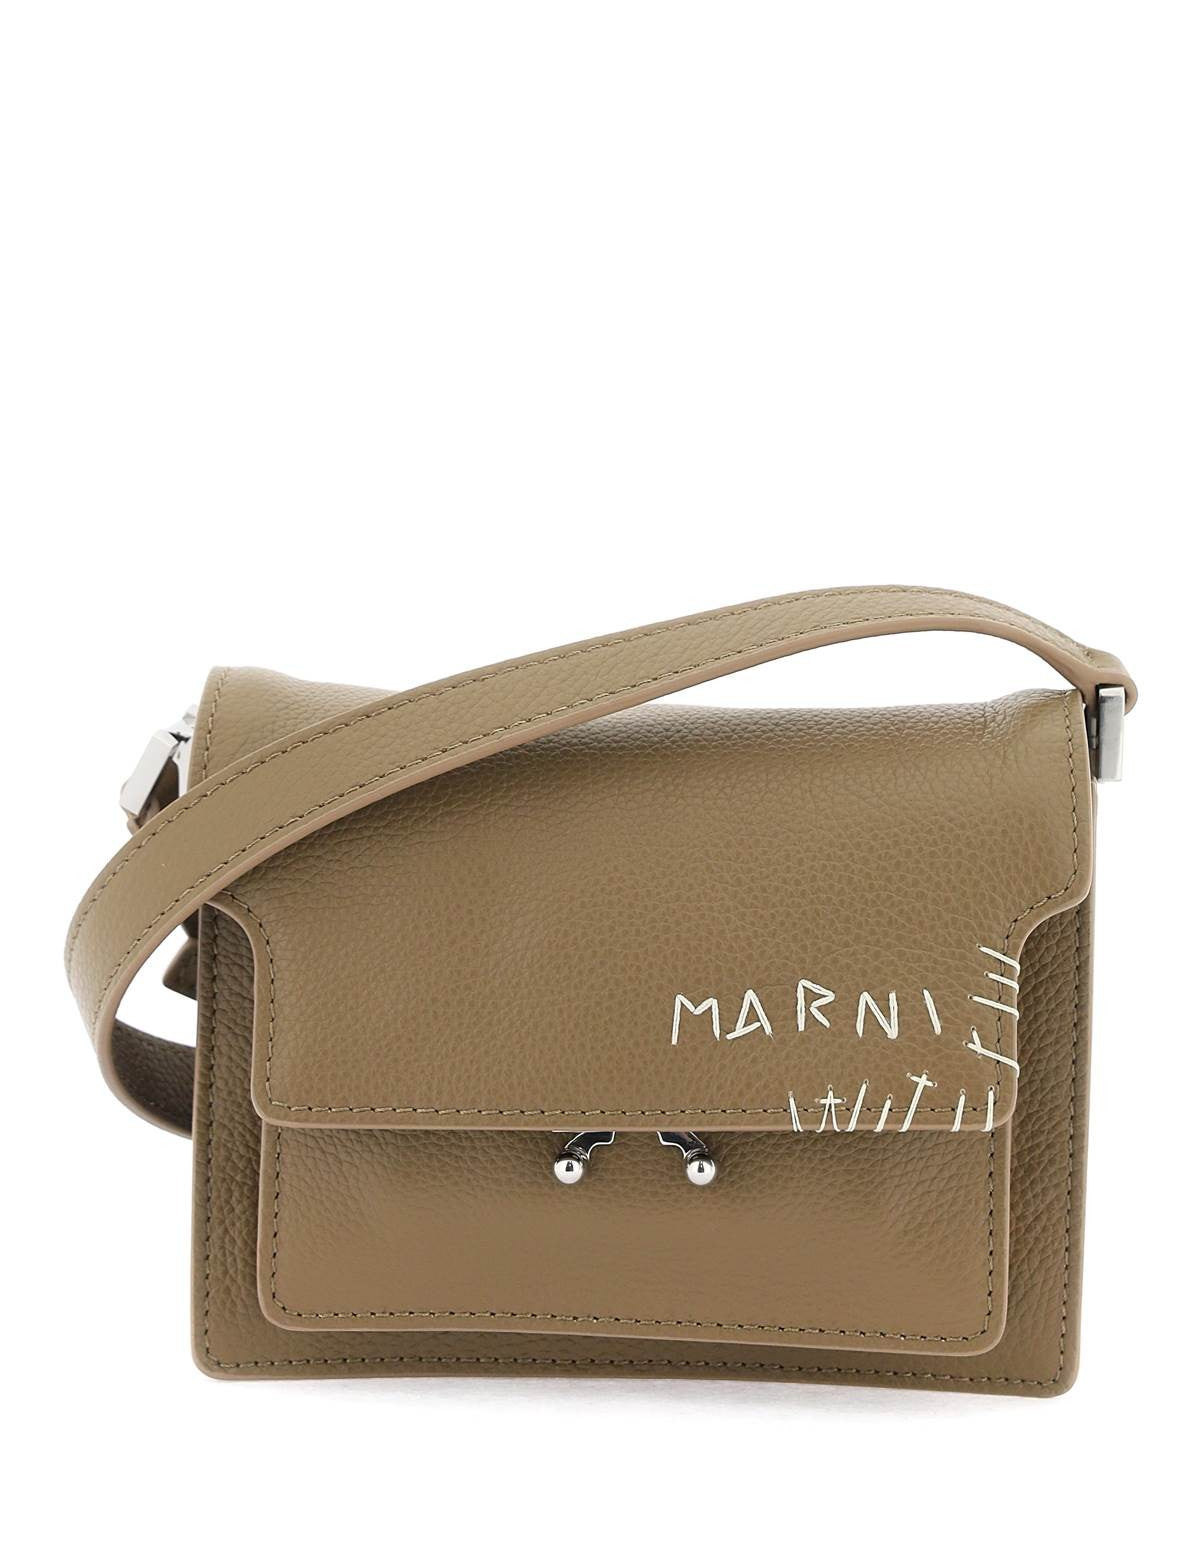 marni-mini-soft-trunk-shoulder-bag.jpg